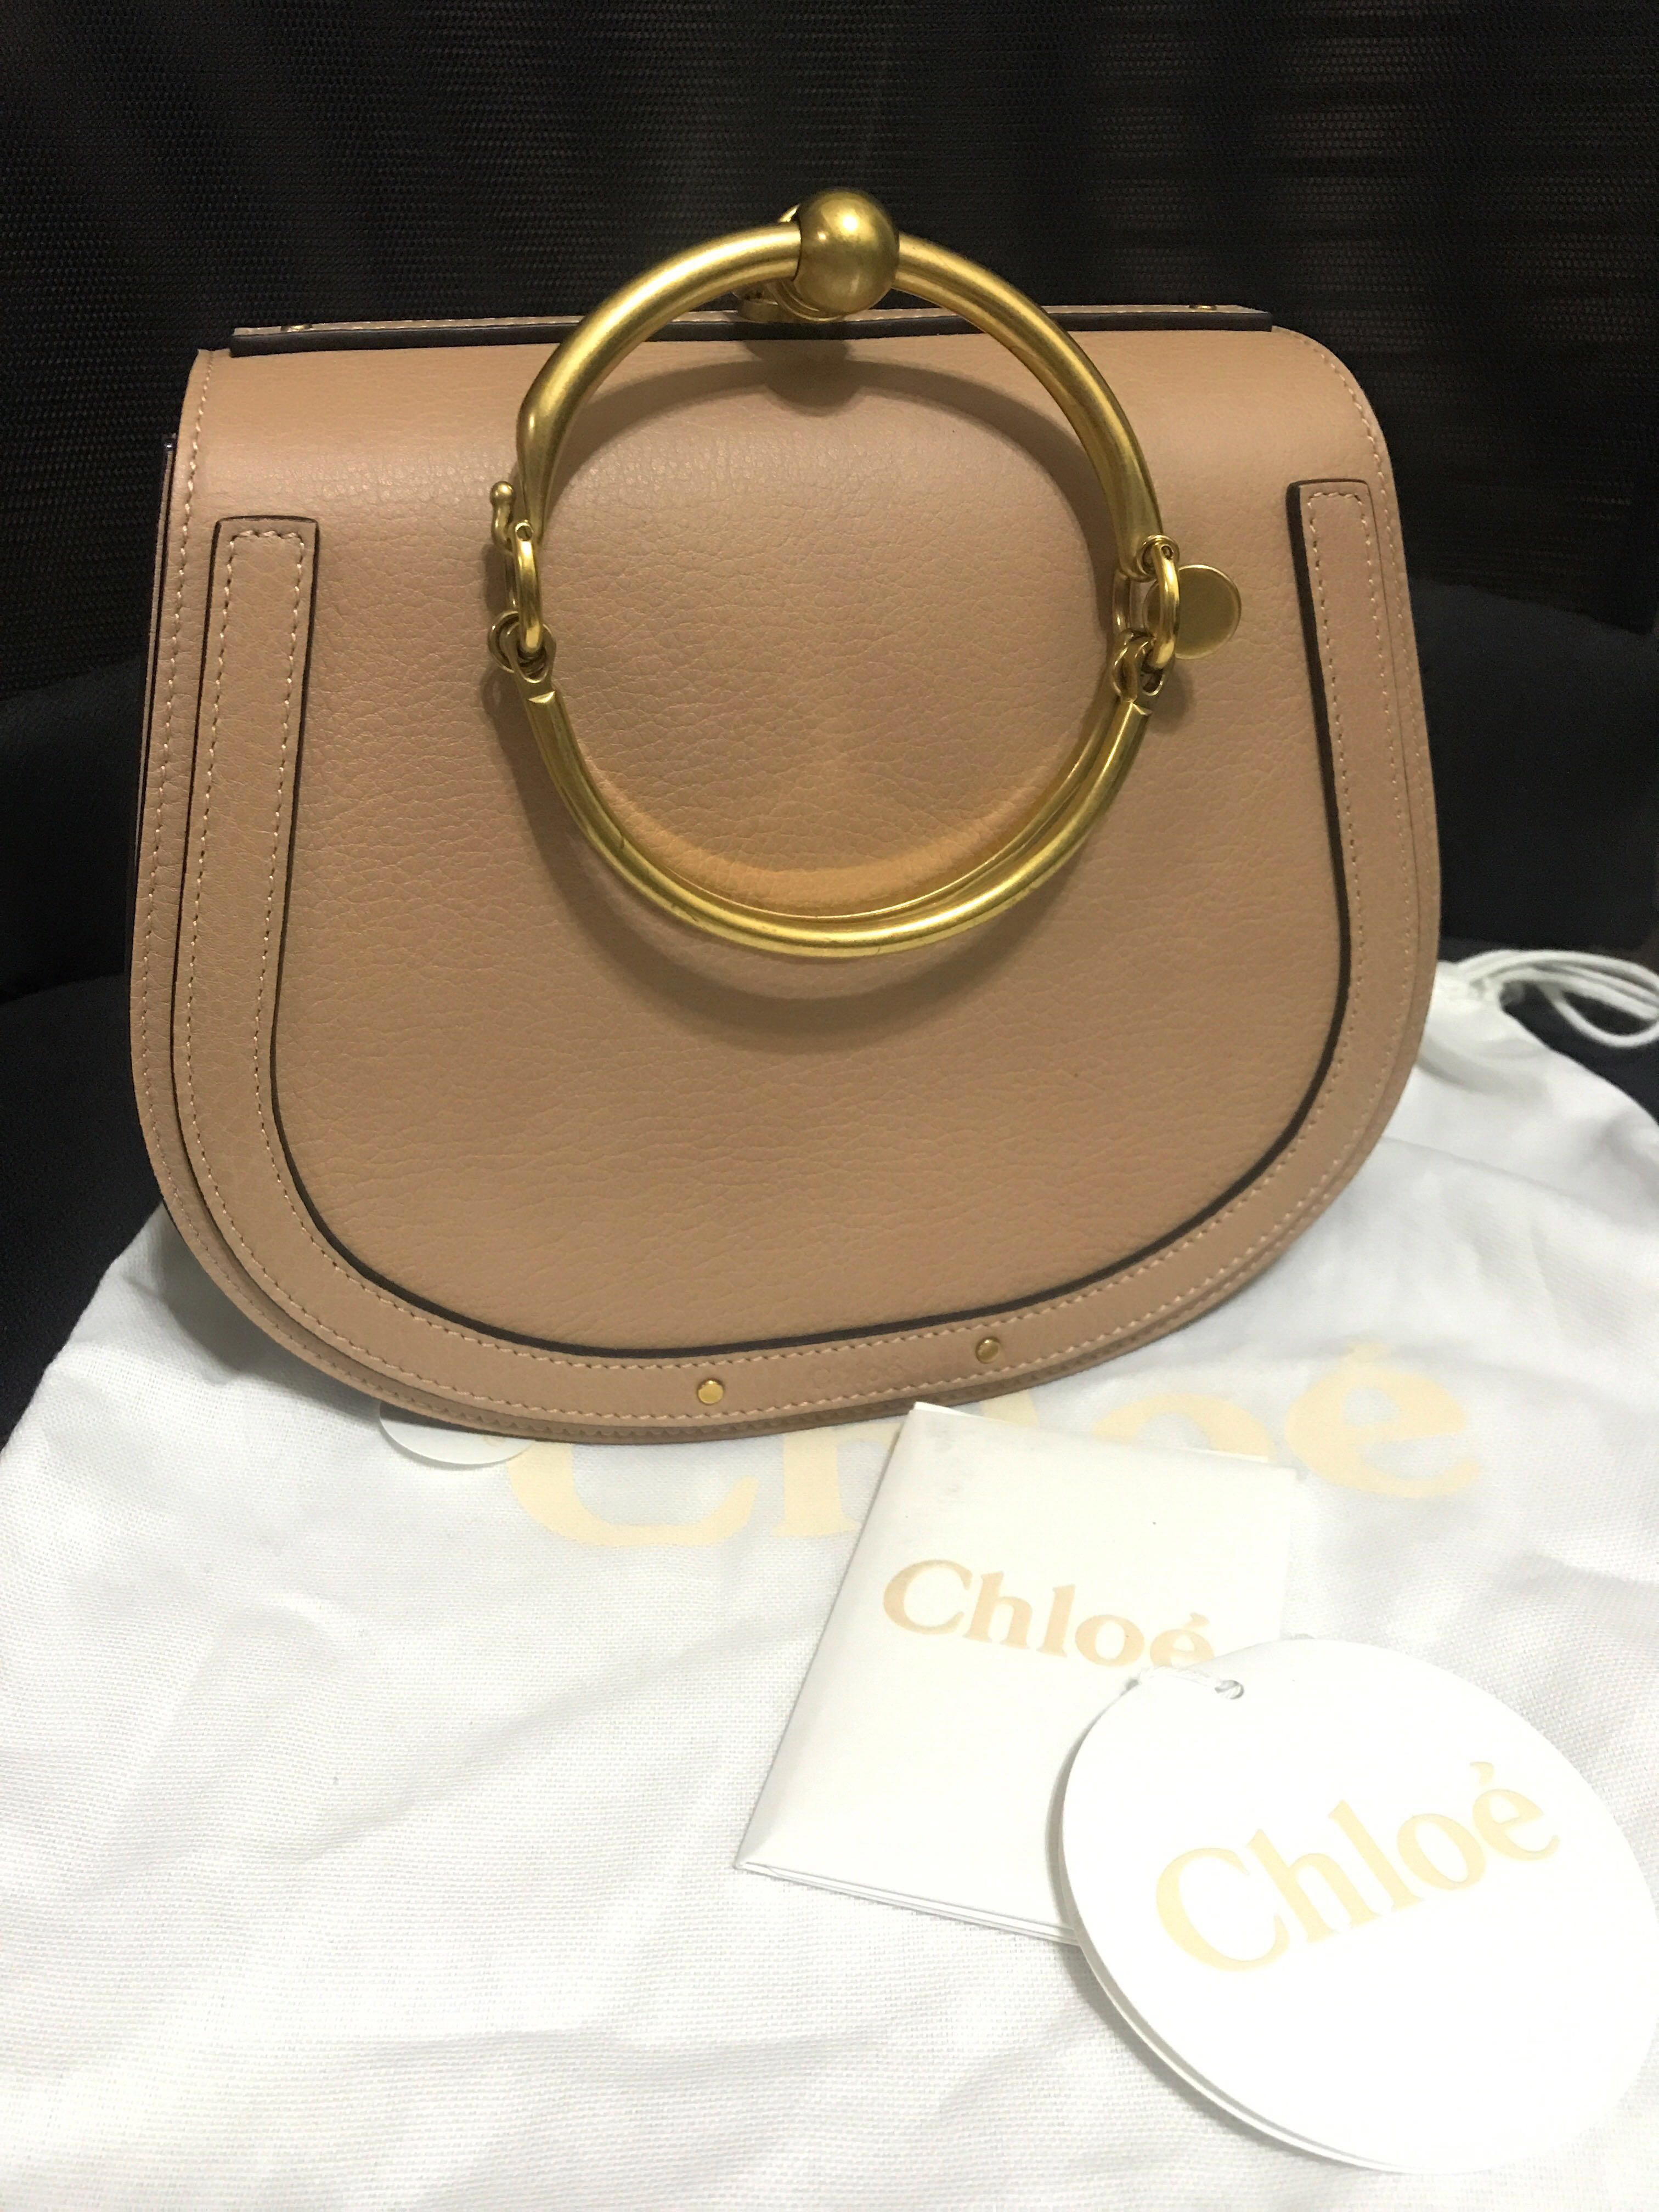 *REDUCED!* Chloe Nile Bag (Medium size) in Biscotti beige